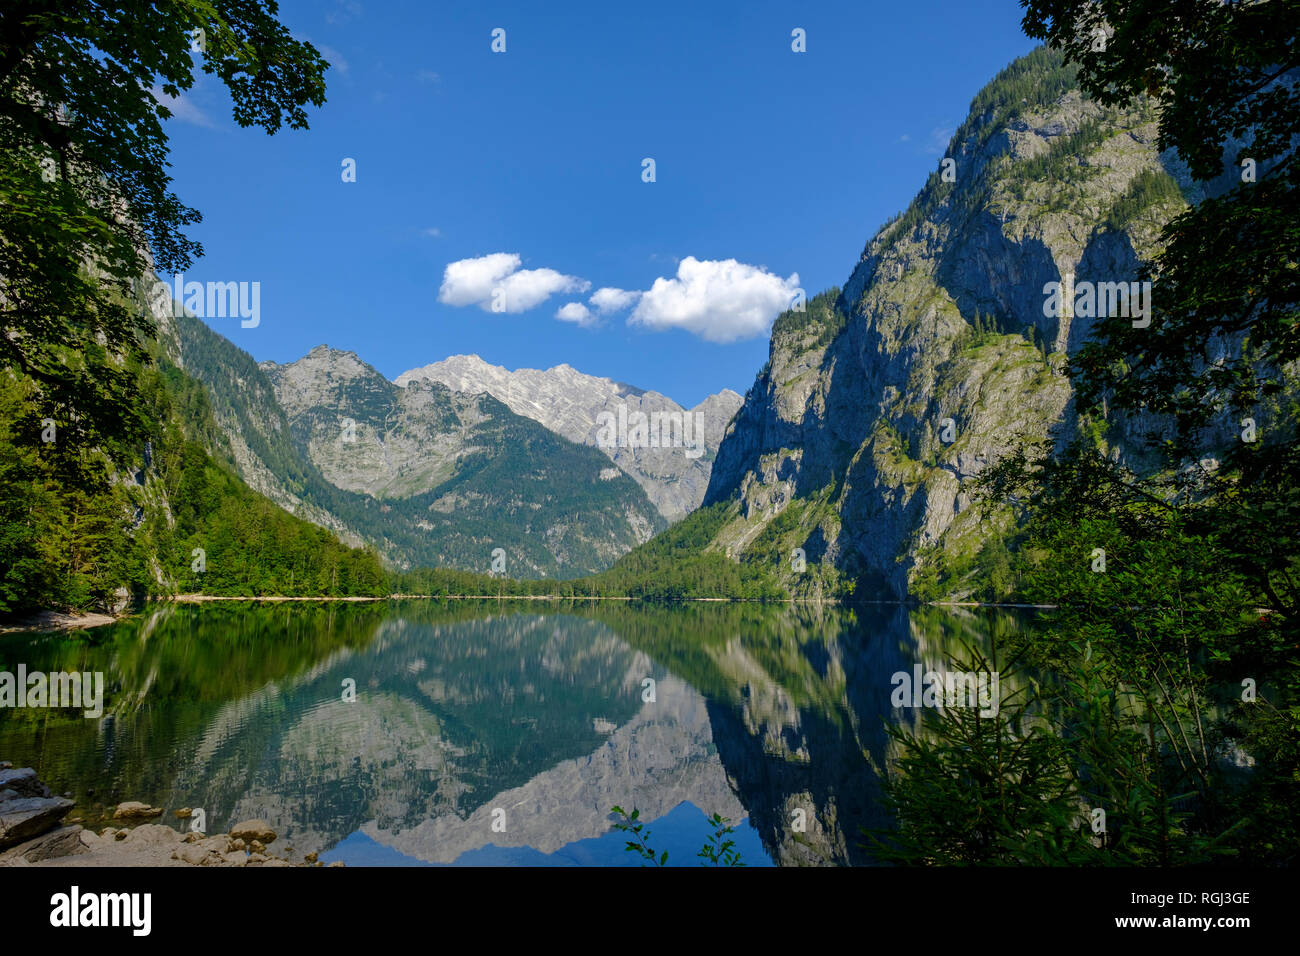 Germany, Bavaria, Upper Bavaria, Berchtesgaden Alps, Berchtesgaden National Park, Salet, Fischunkelalm at Lake Obersee Stock Photo